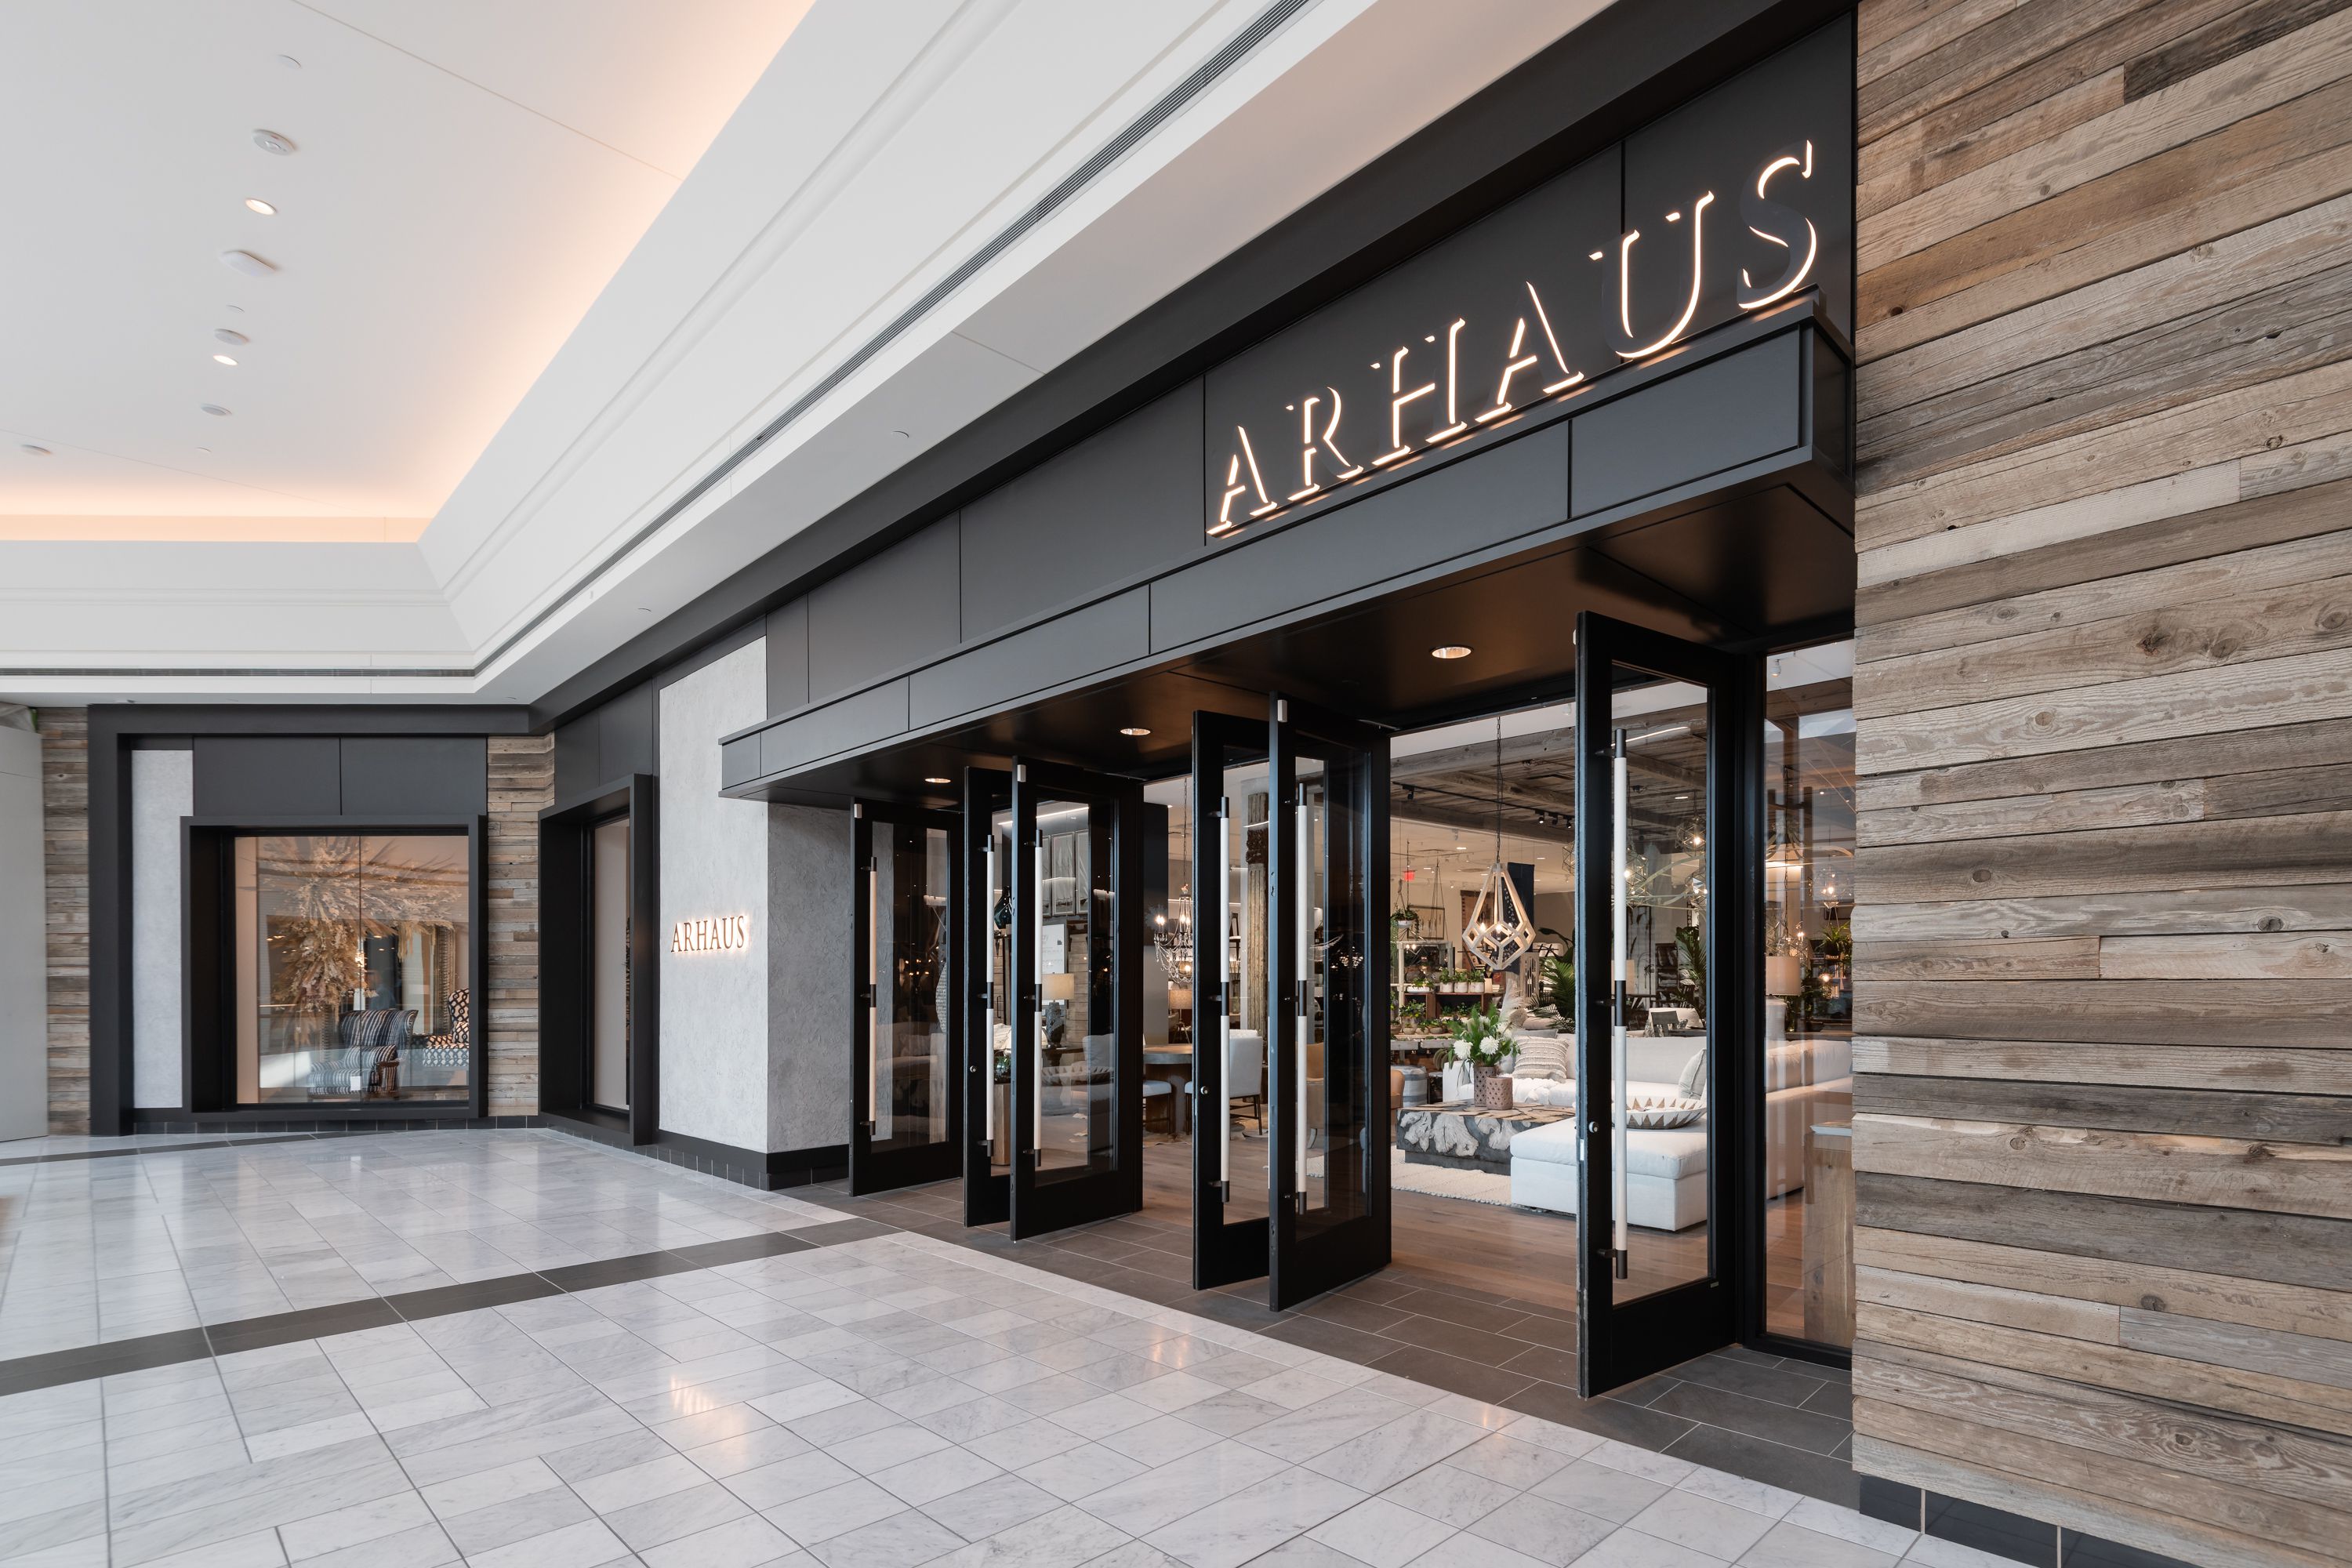 Posh furniture hub Arhaus to open in former Sears store at